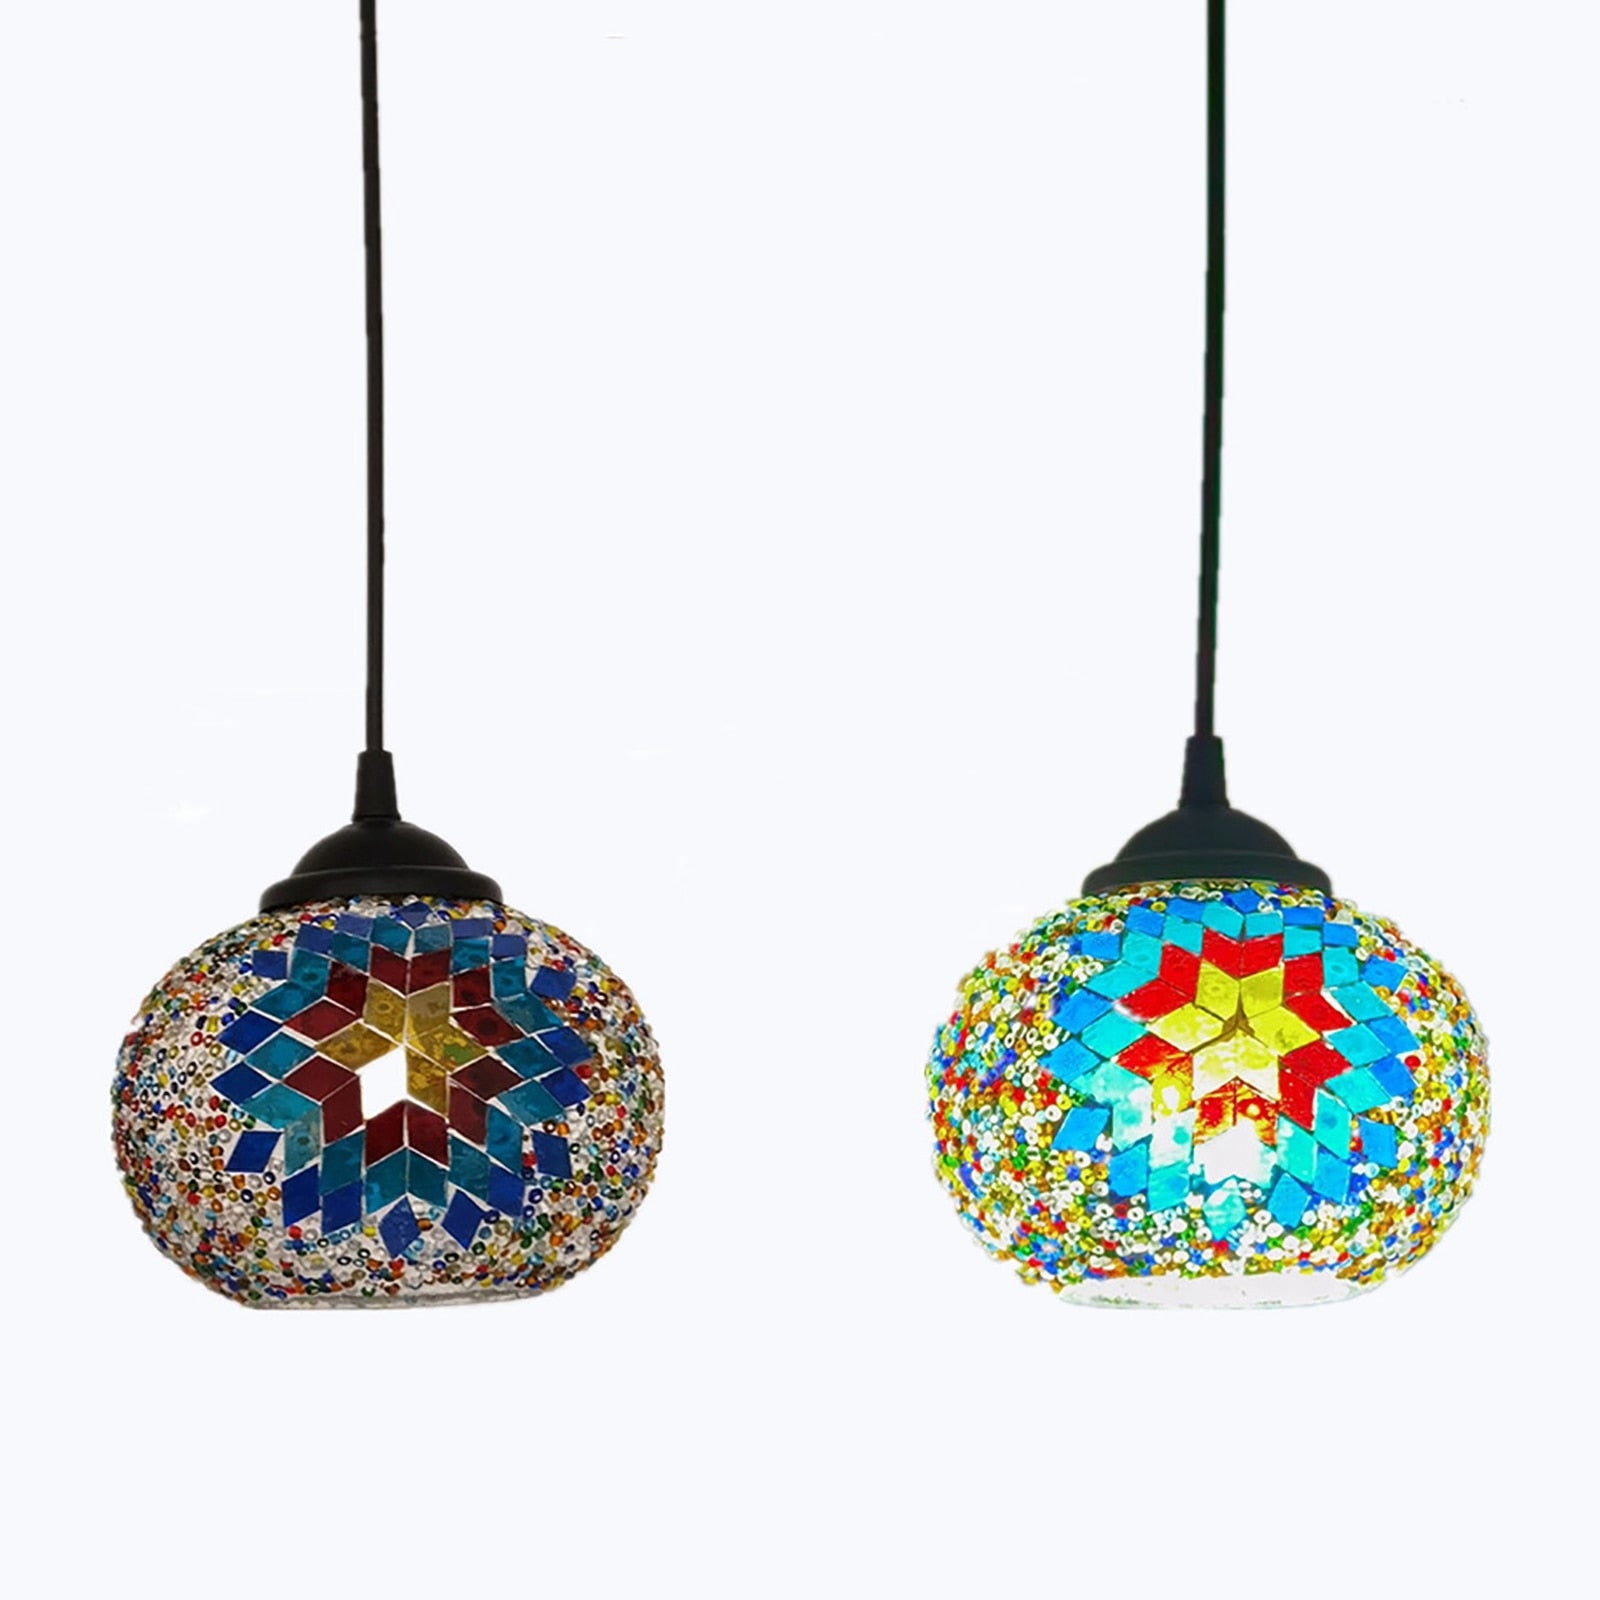 Mediterranean Style Pendant Light Decoration- Zen Decor Ideas - Personal Hour for Yoga and Meditations 